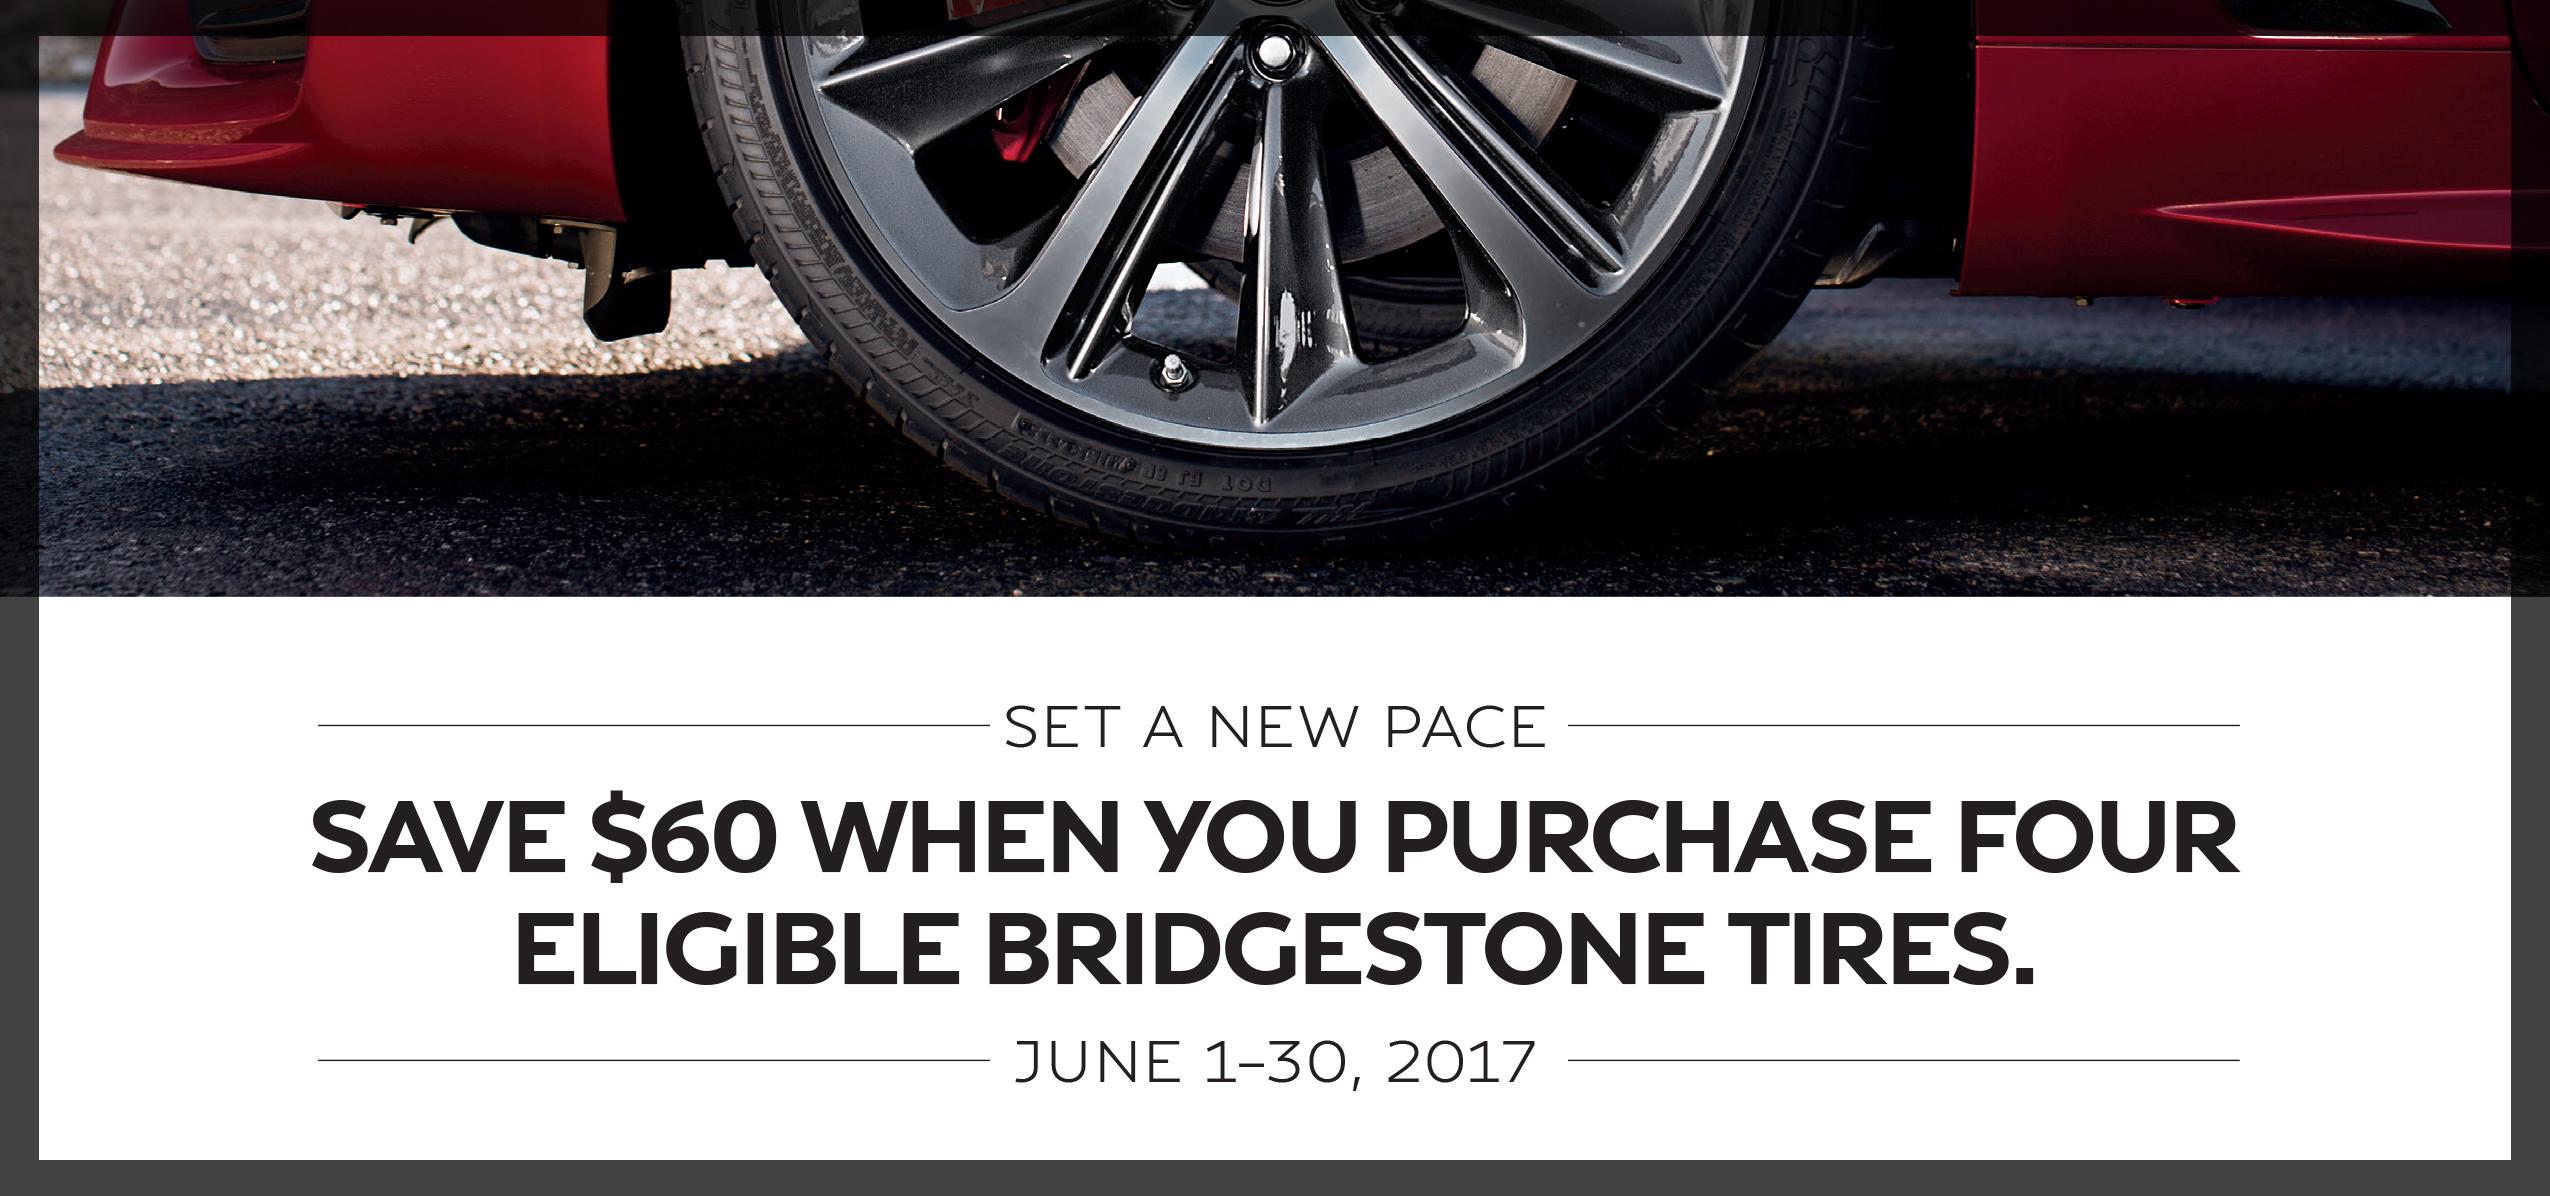 bridgestone-tires-in-tampa-fl-infiniti-of-tampa-bridgestone-tire-deals